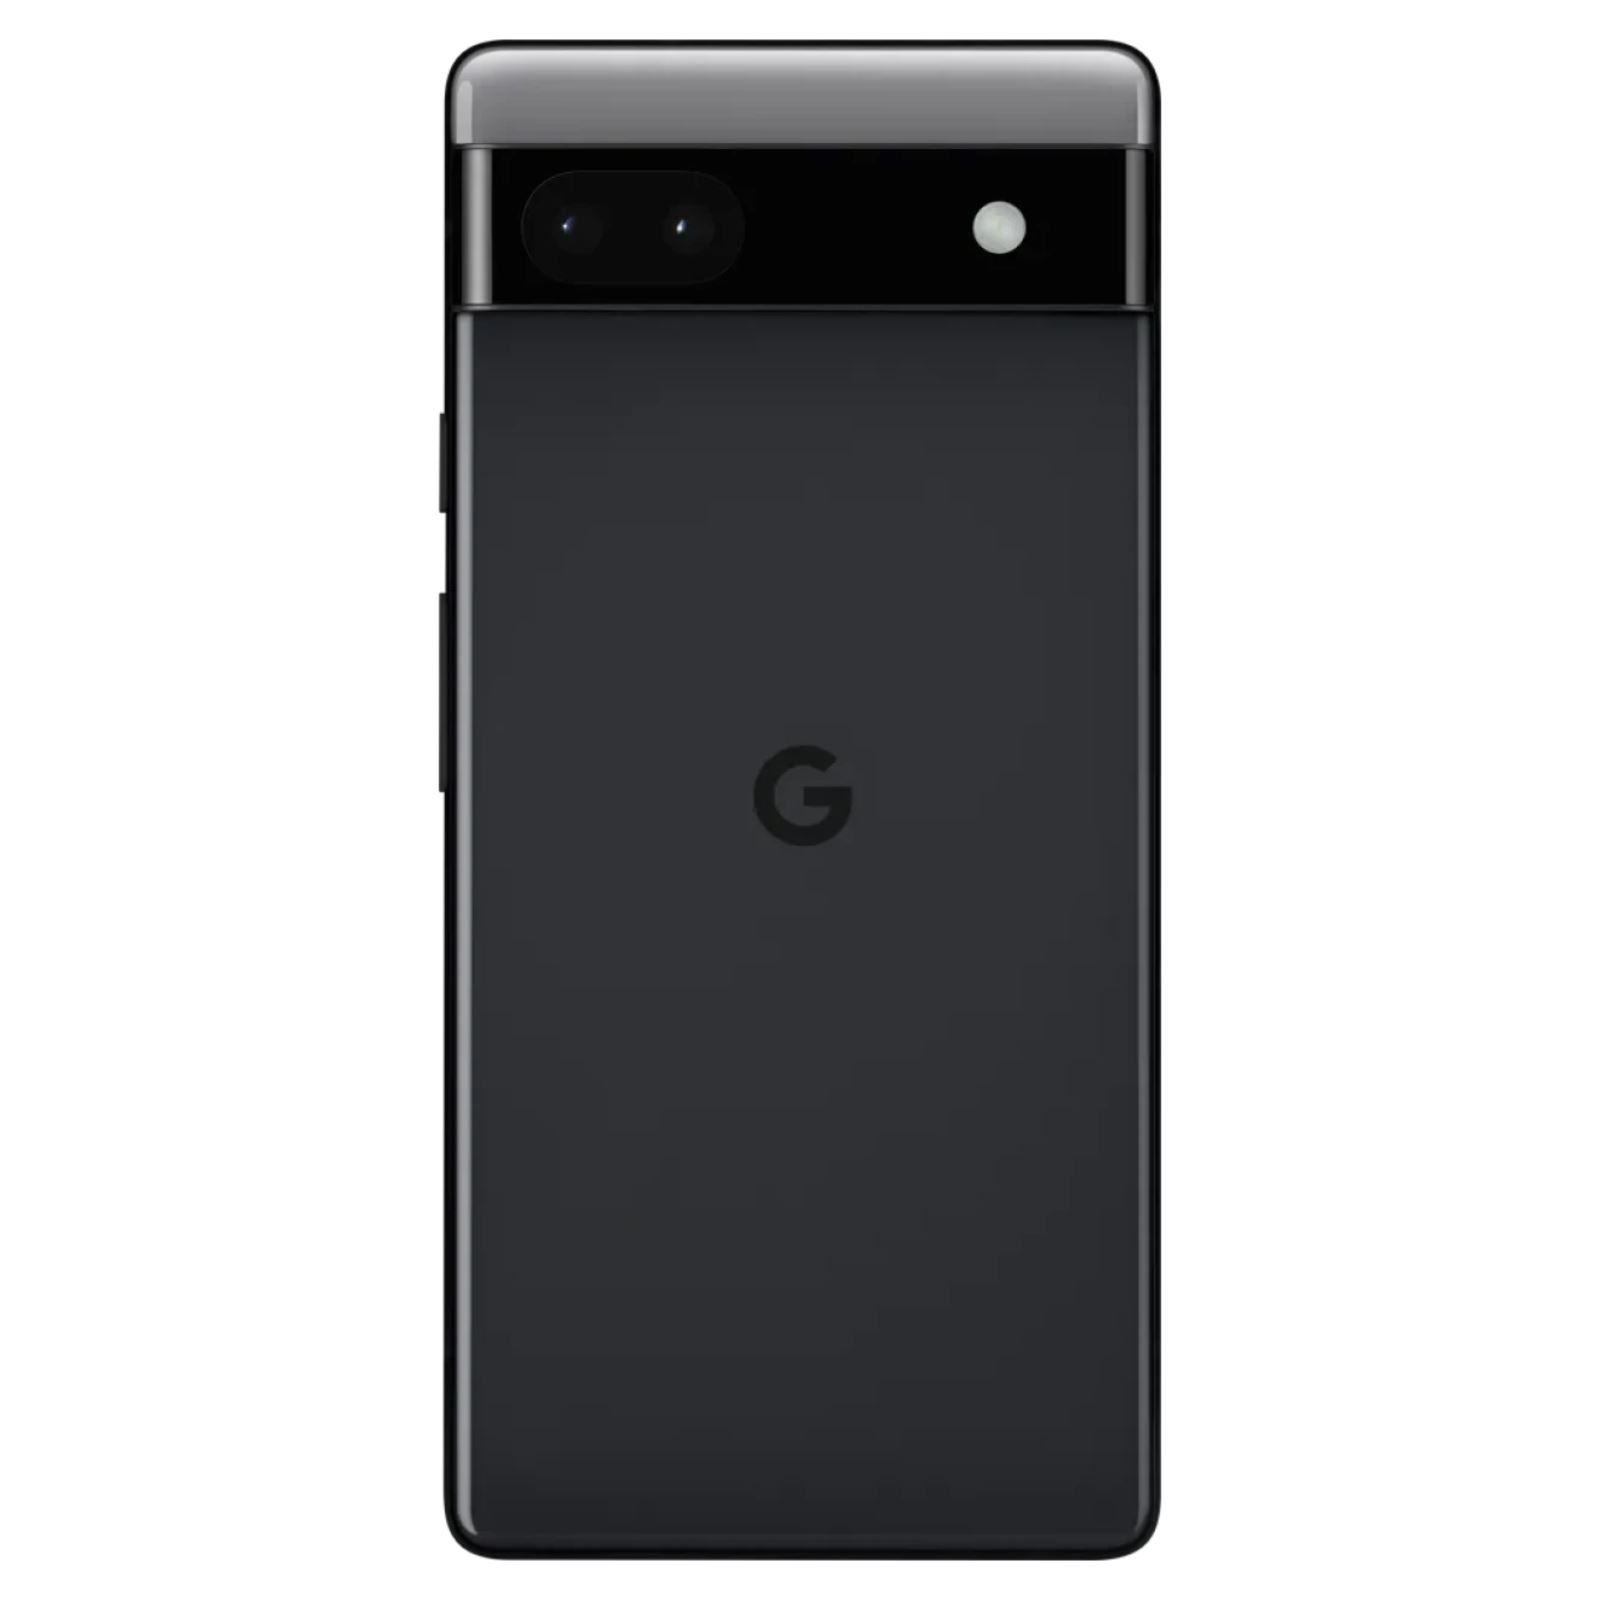 Google Pixel 6a Charcoal 128 GBgoogle